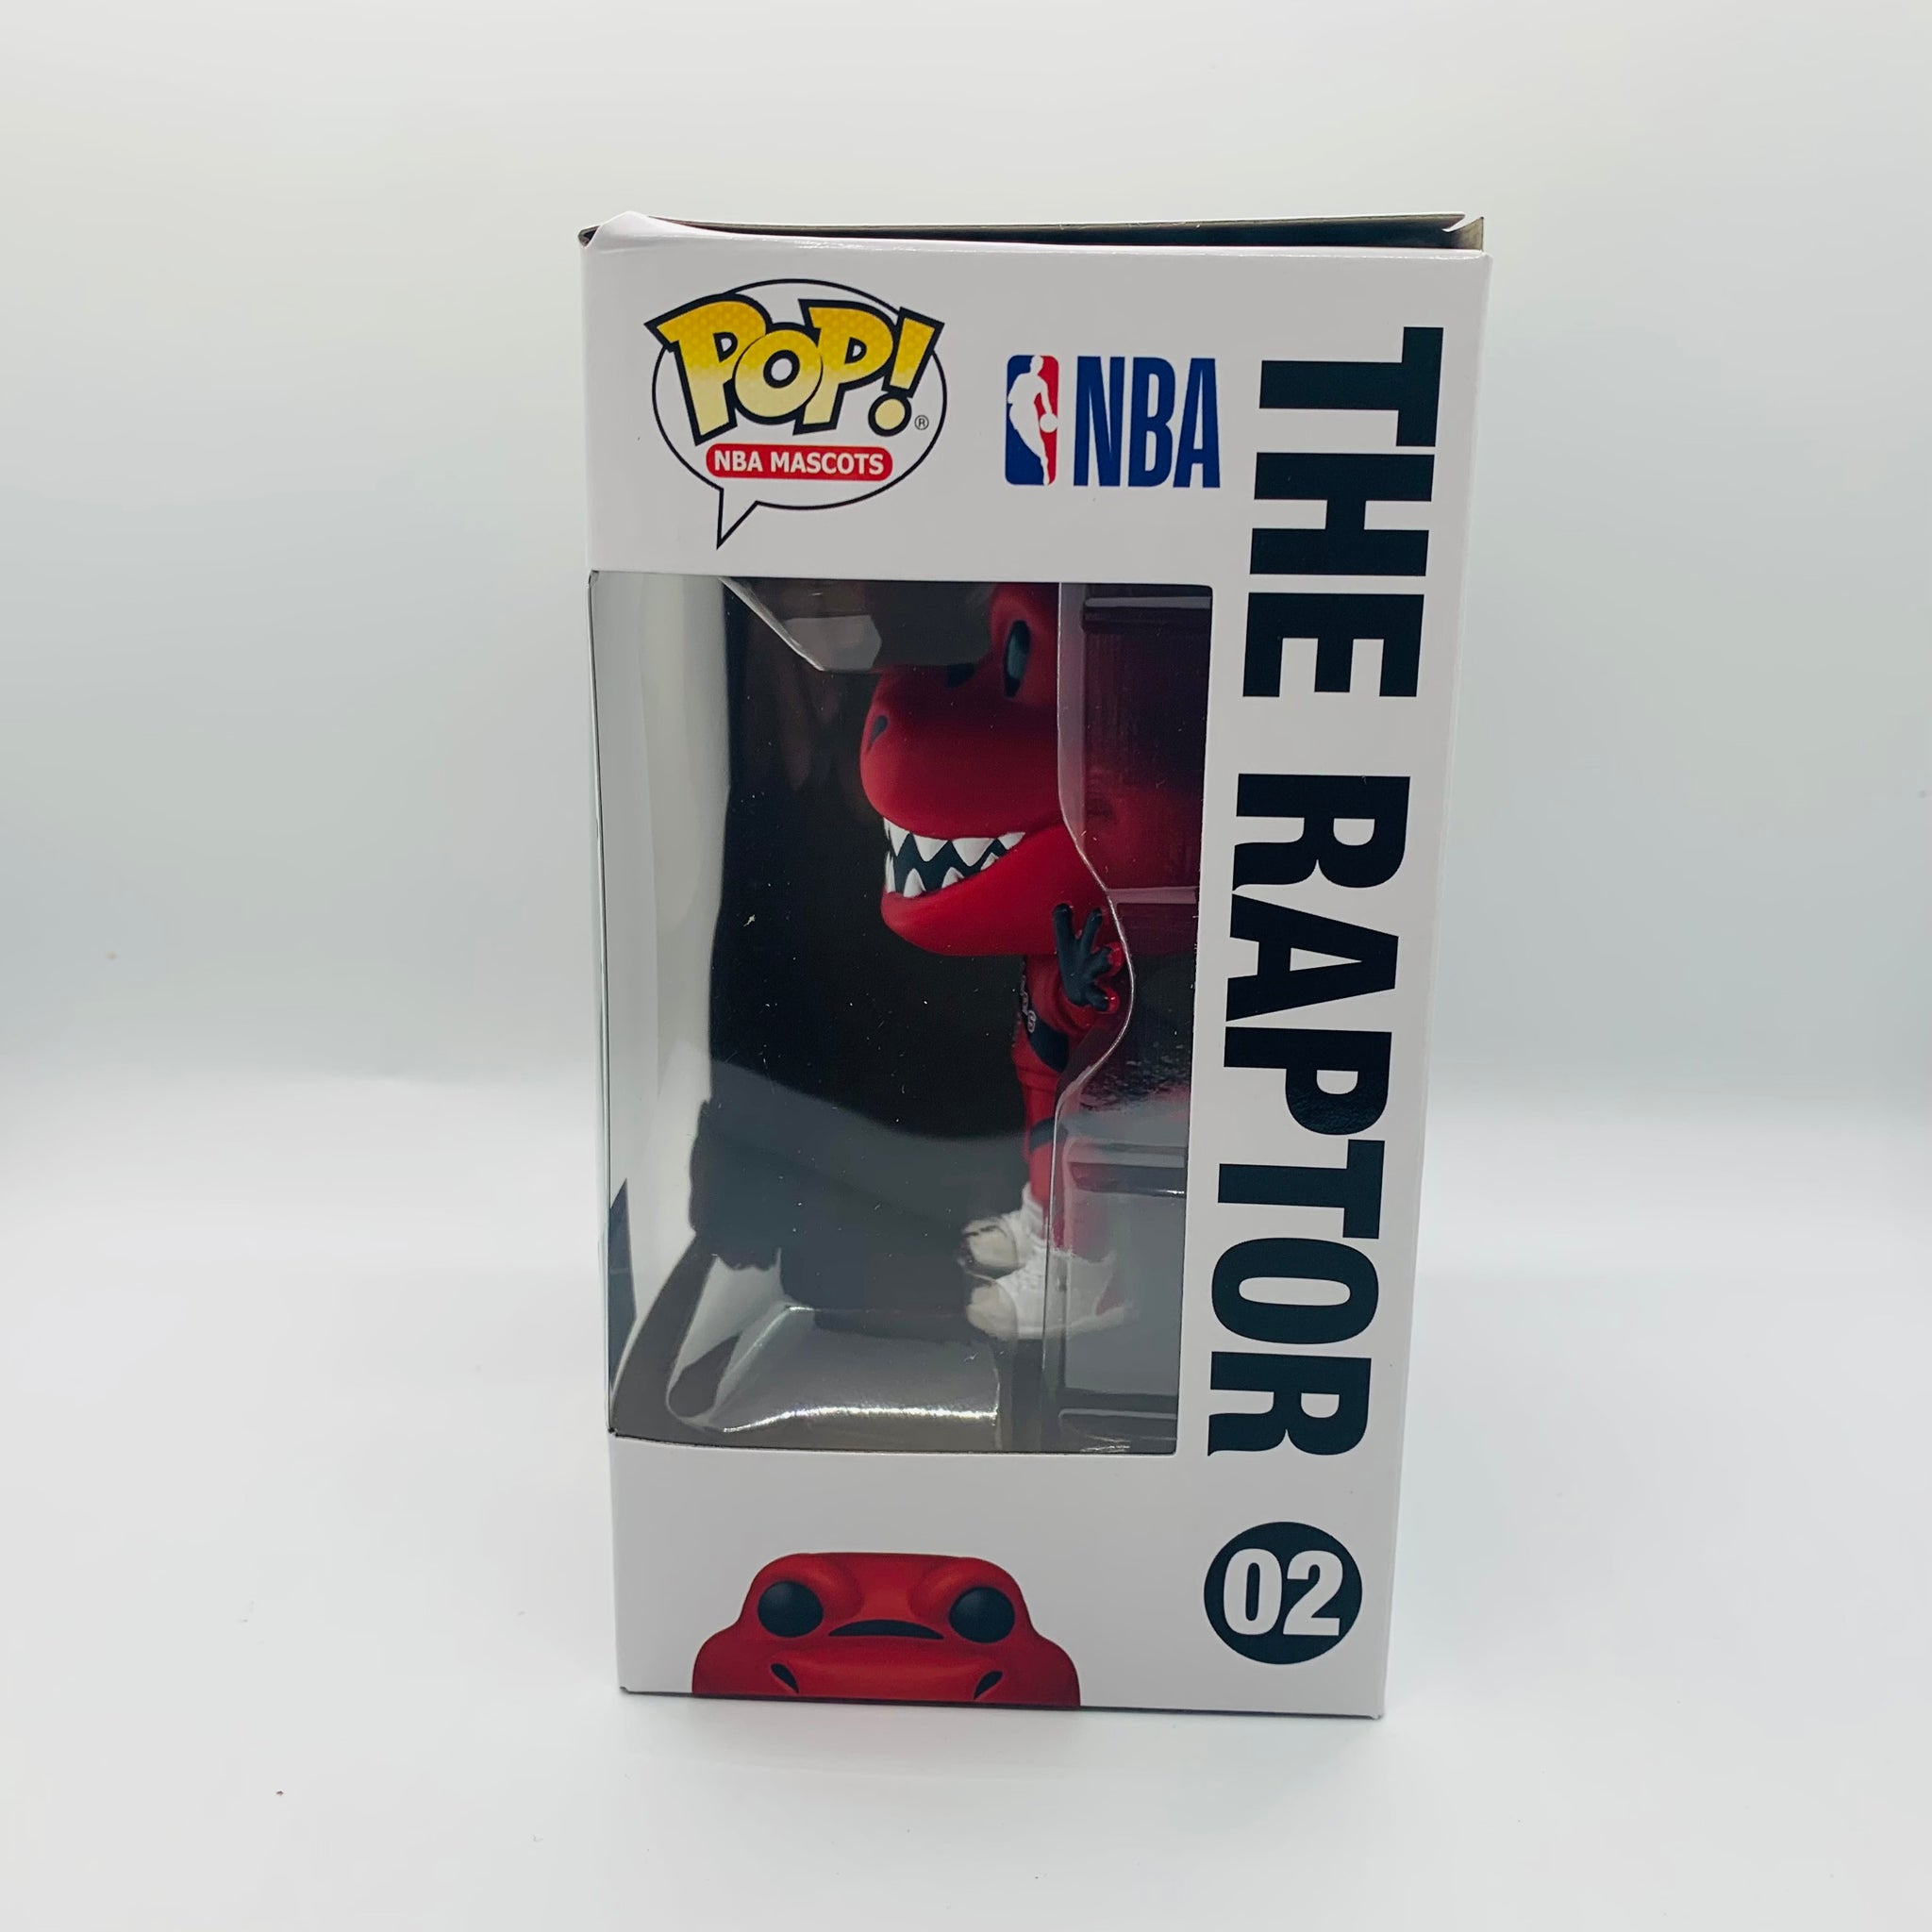 Pop! NBA Mascots: The Raptor (In Stock) Vinyl Figure – Poppin' Off